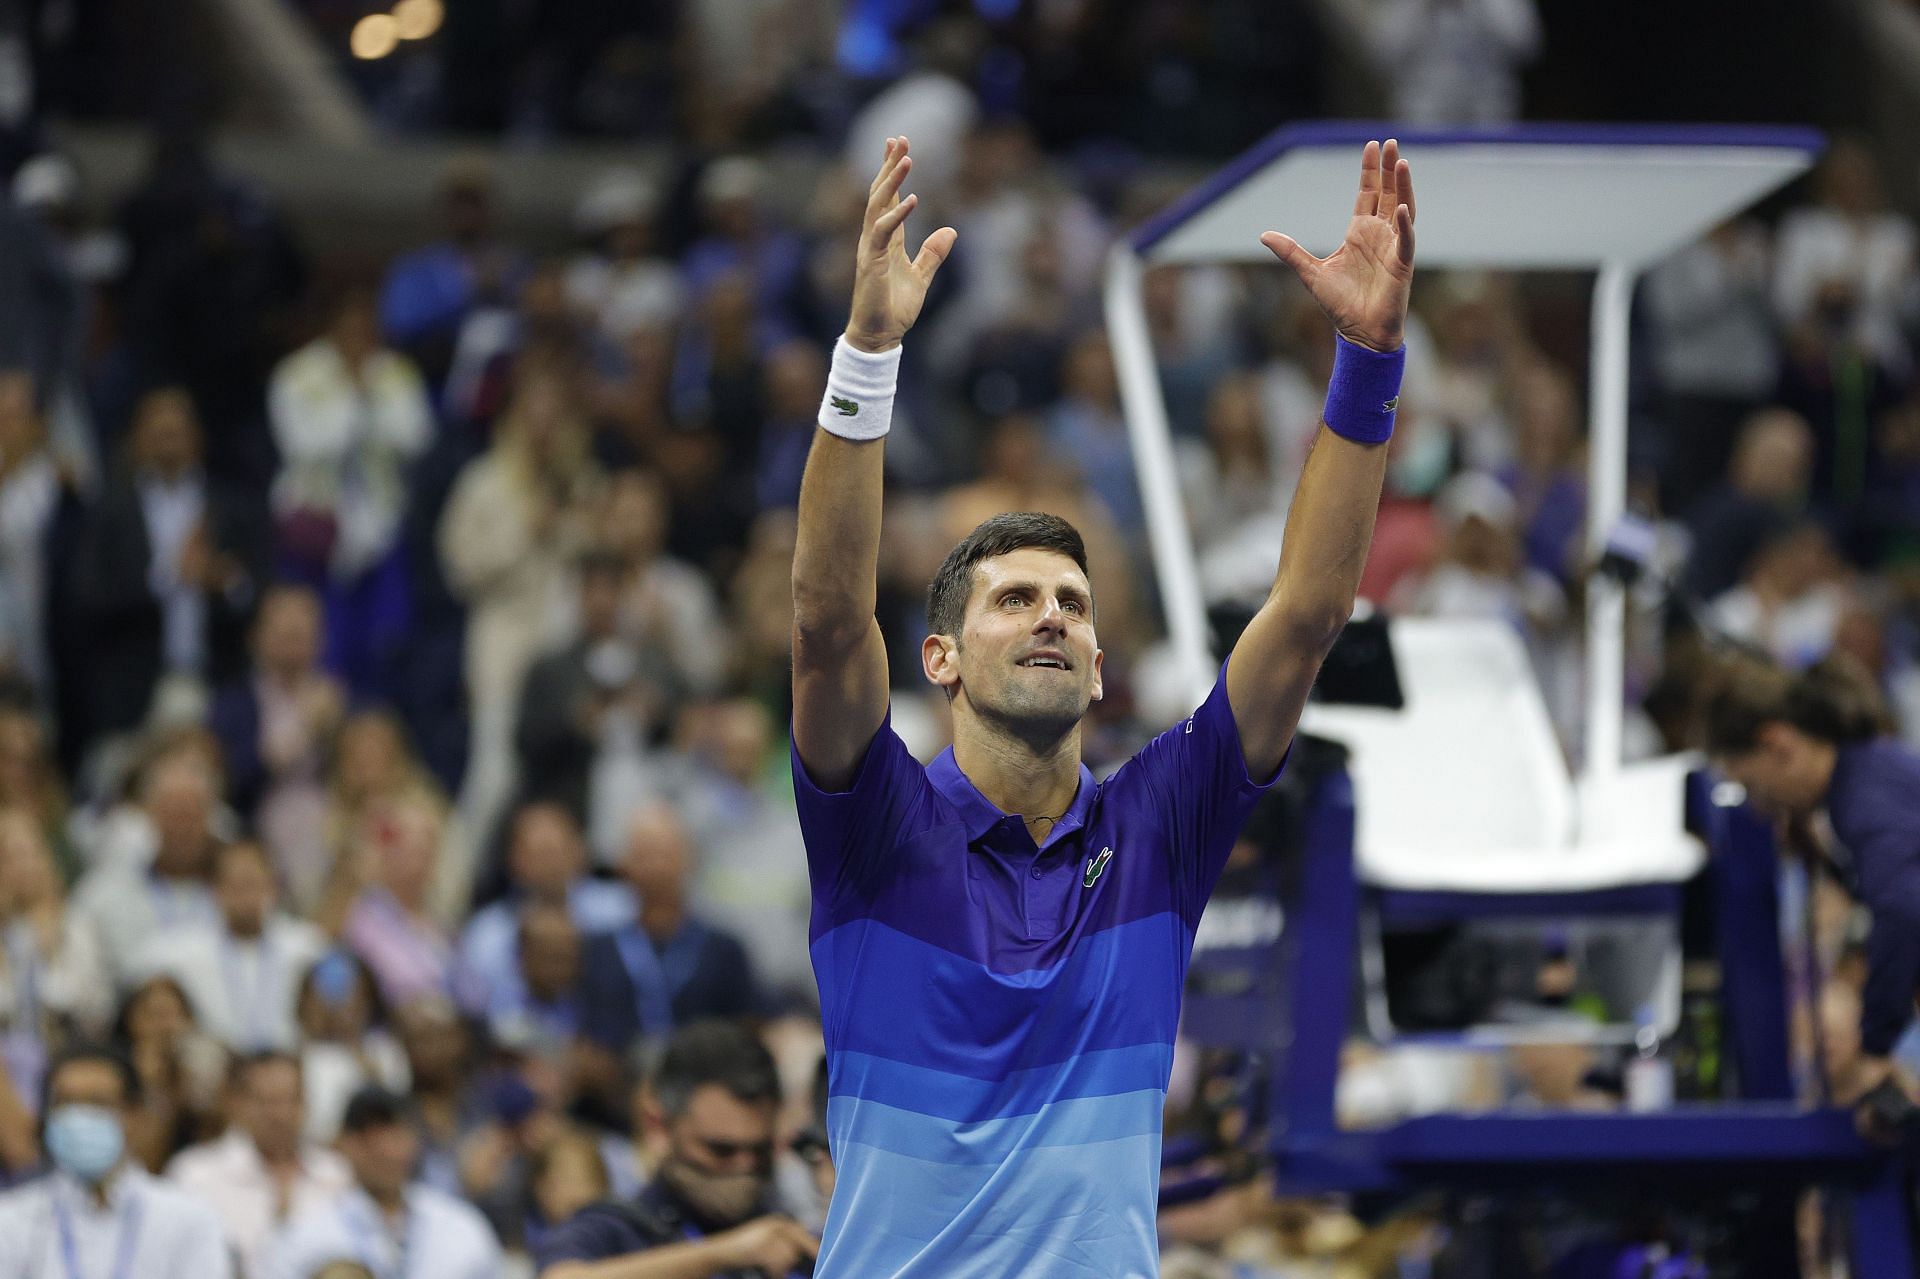 Novak Djokovic celebrates at the 2021 US Open